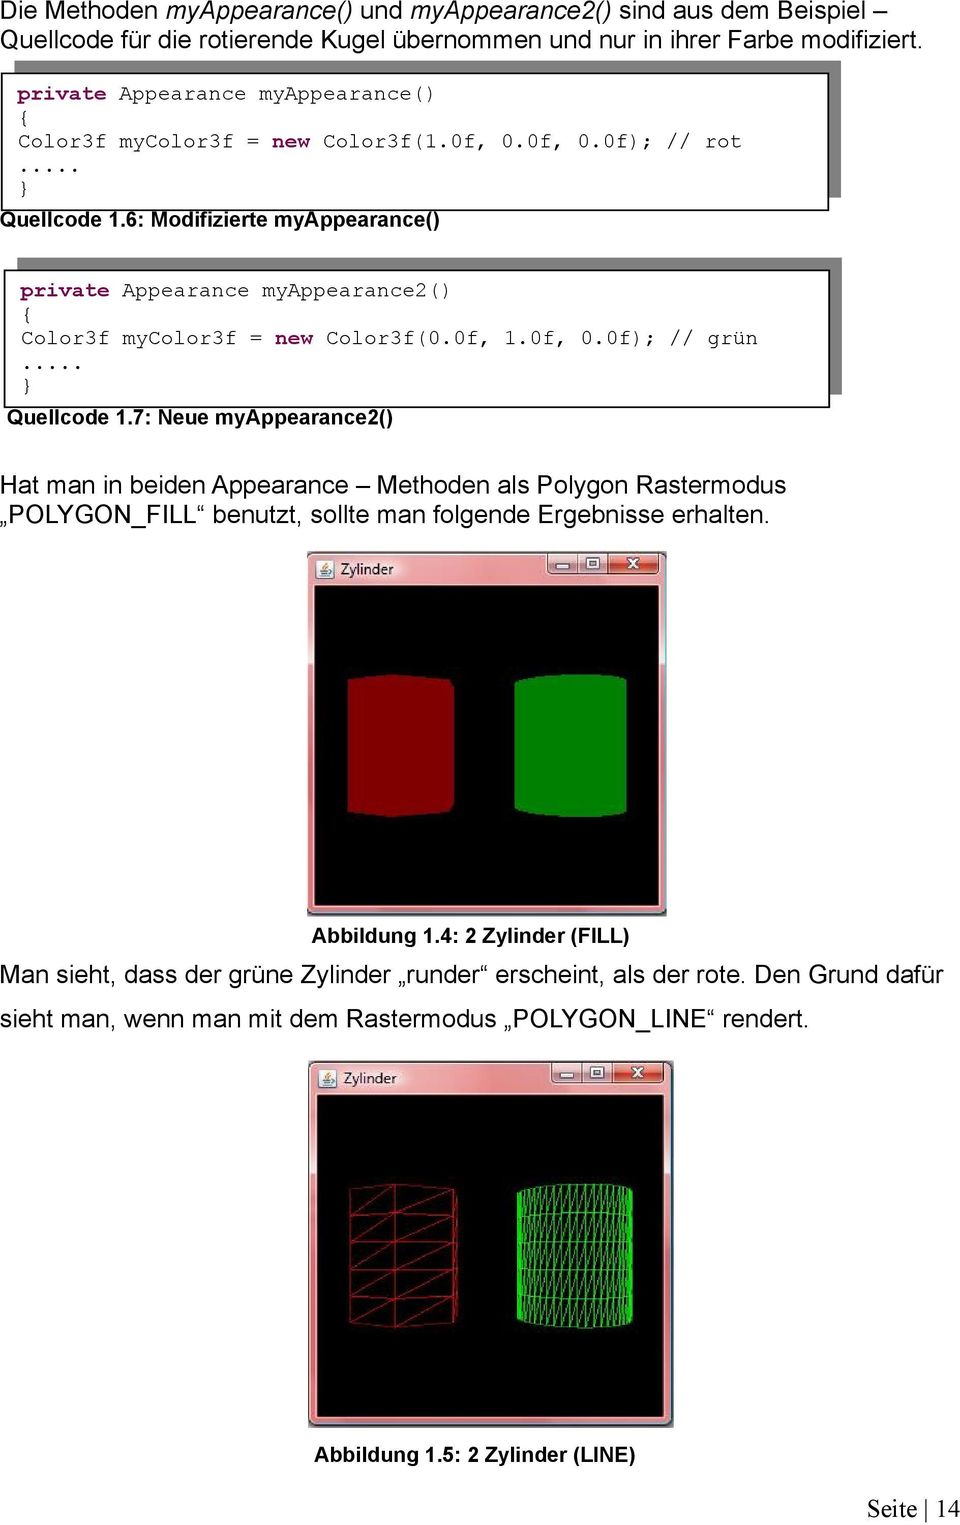 6: Modifizierte myappearance() private Appearance myappearance2() Color3f mycolor3f = new Color3f(0.0f, 1.0f, 0.0f); // grün... Quellcode 1.